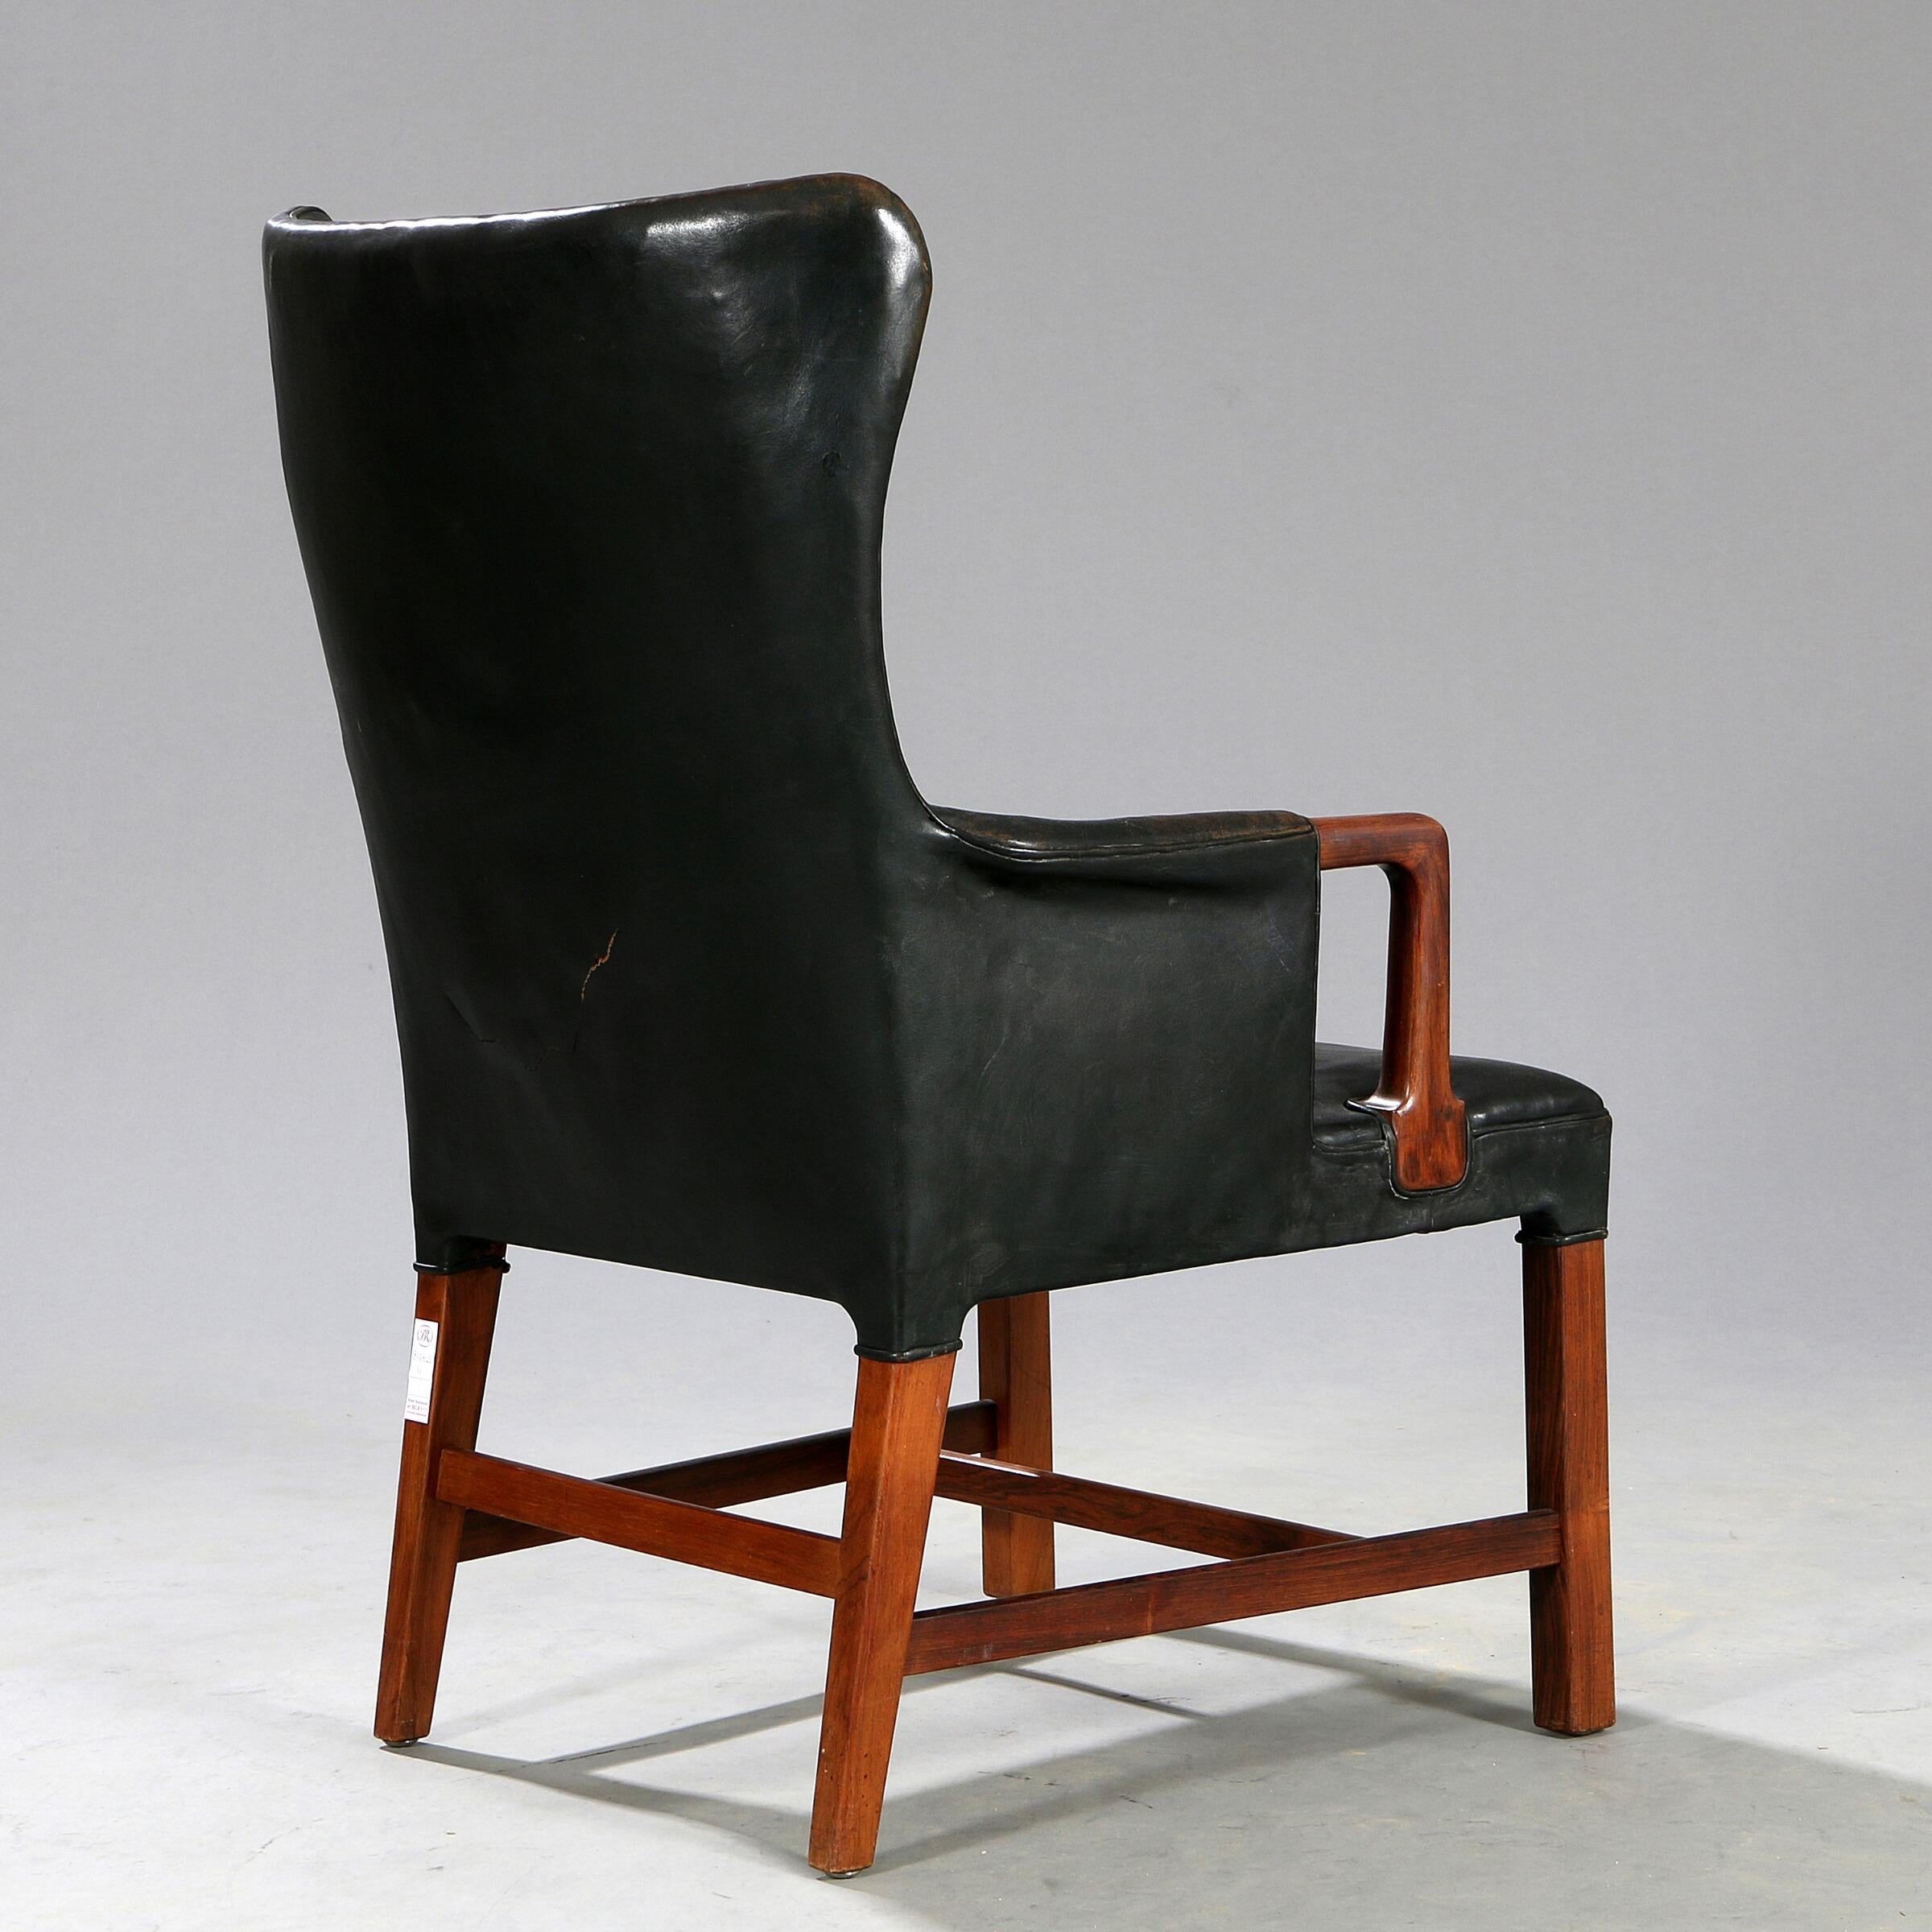 Peter Hvidt: Sessel aus Palisanderholz und schwarzem Leder um 1955 (Skandinavische Moderne) im Angebot